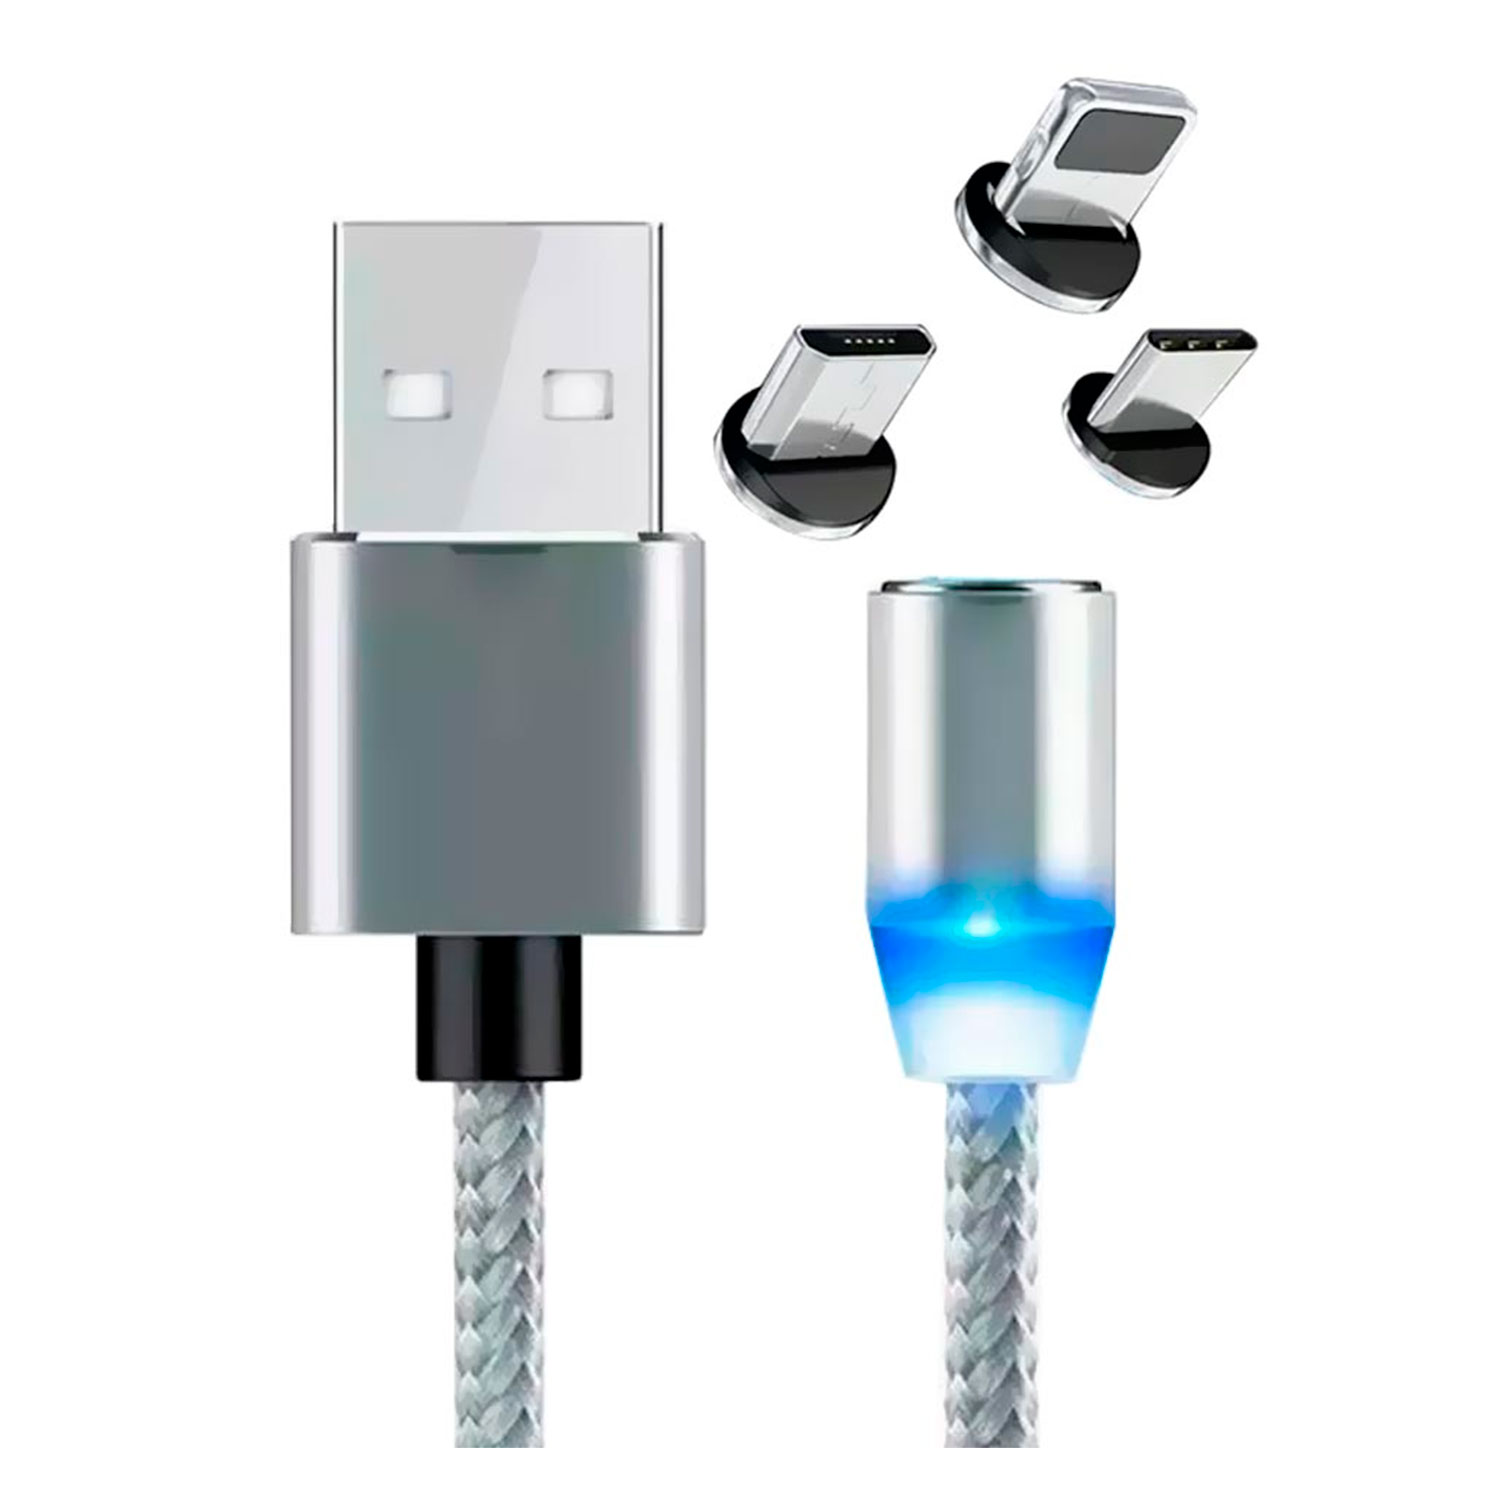 Cabo Magnético Smartzla USB 2.0 a Lightning Type-C Micro USB SAT-C005 1M - Prata
